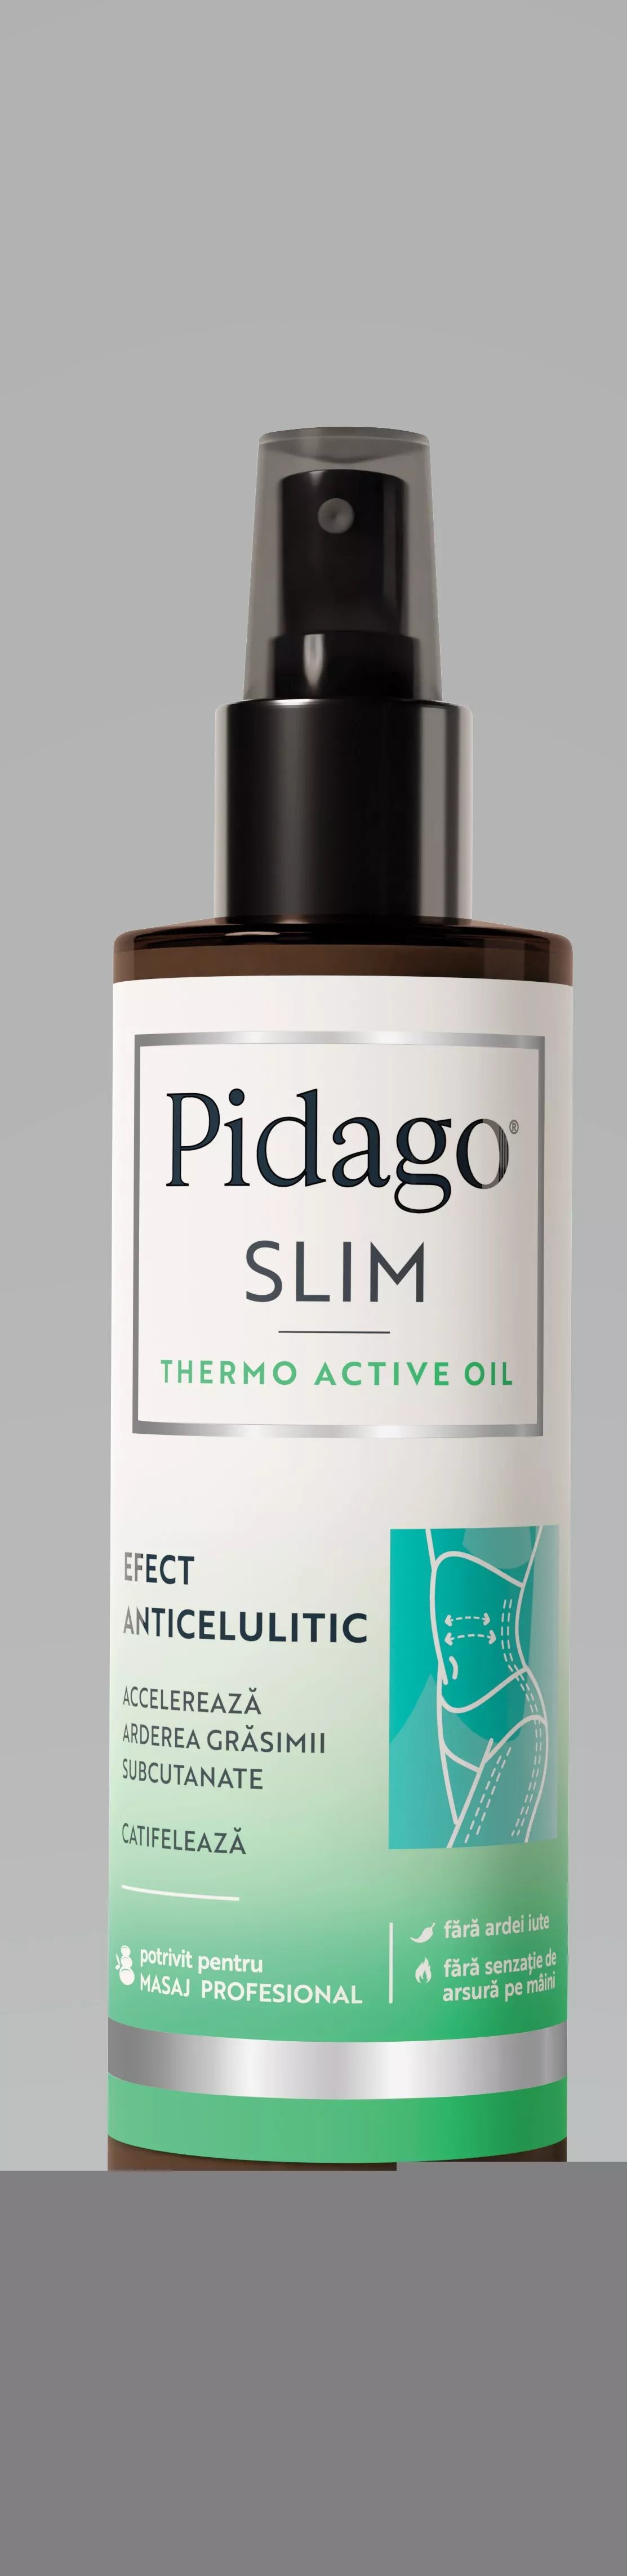 Pidago Slim thermo active oil 150ml